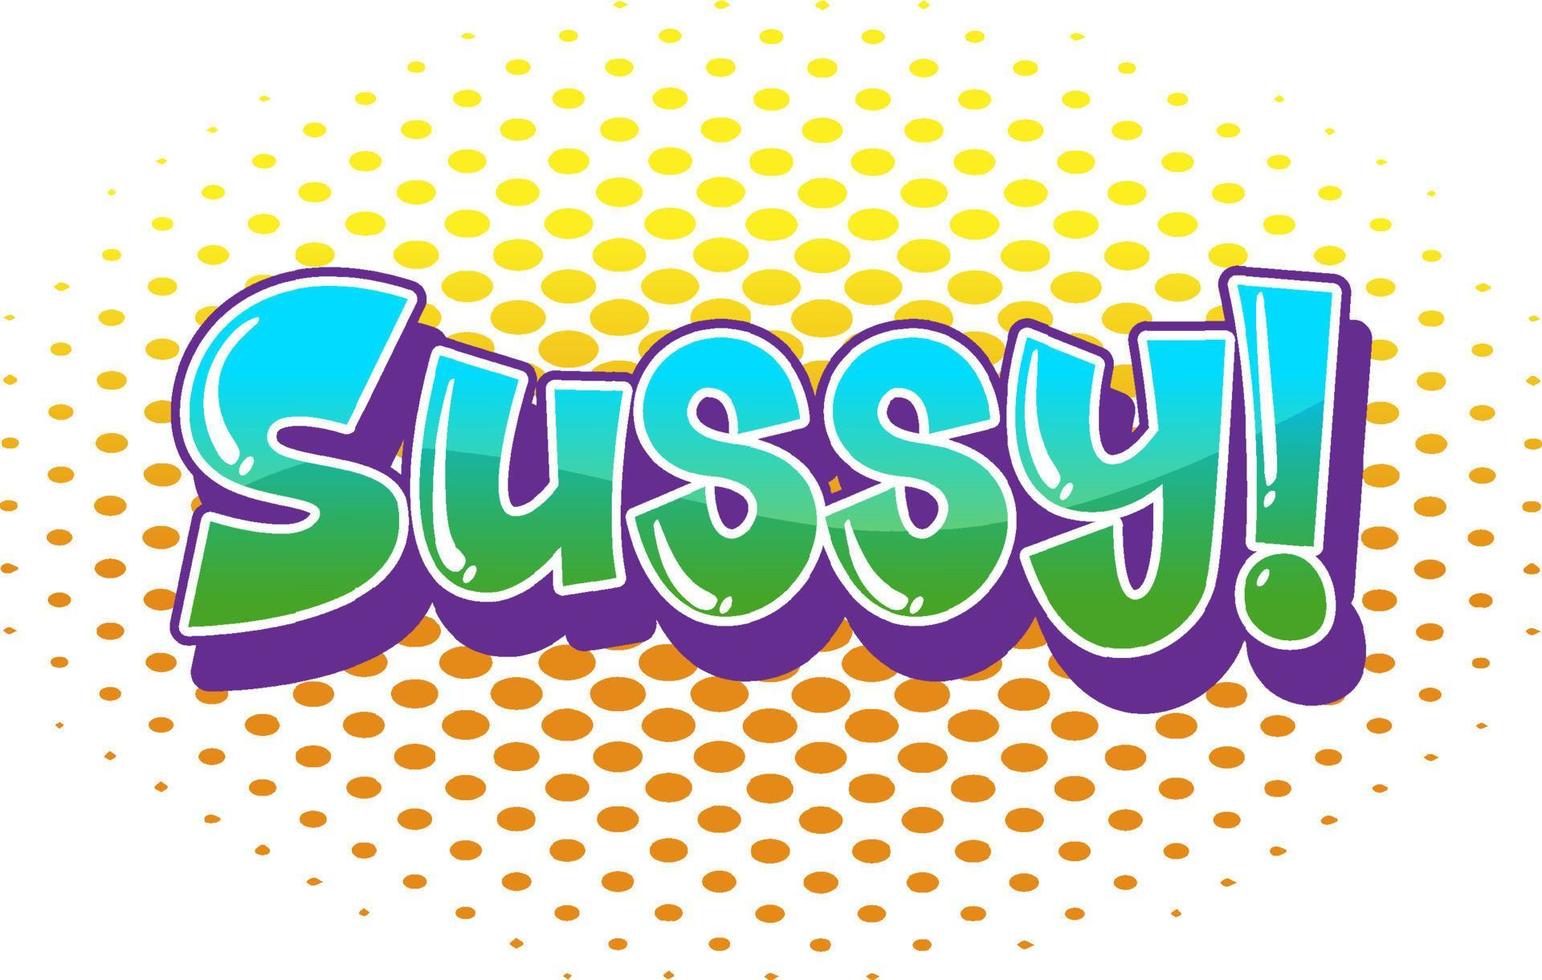 sussy tekst woord banner komische stijl vector